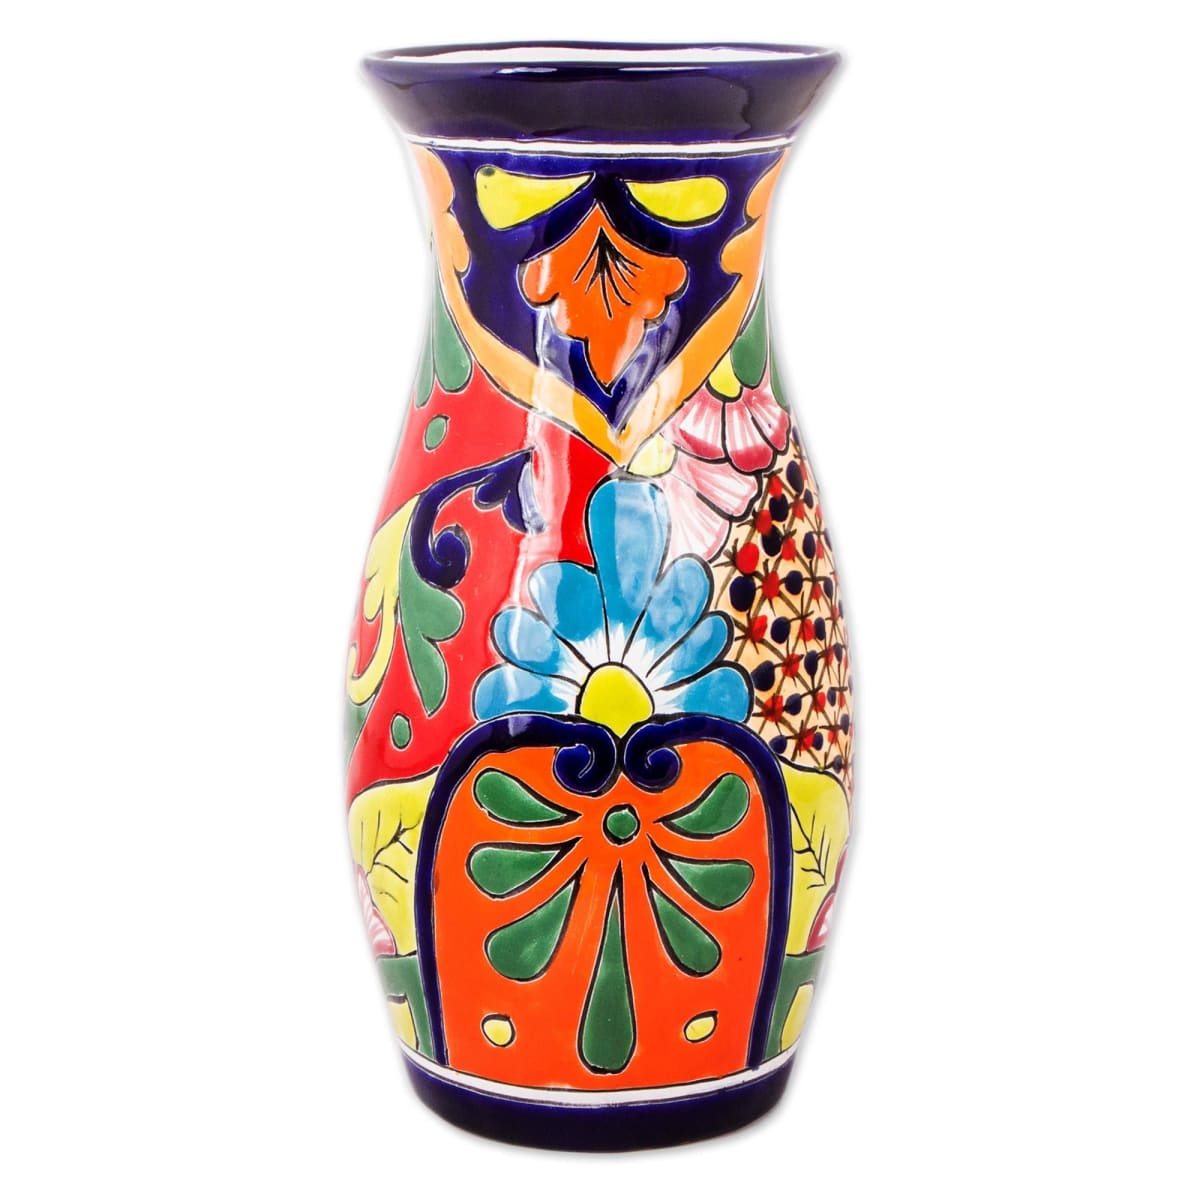 Colored Artisan Glassware from Oaxaca, Mexico